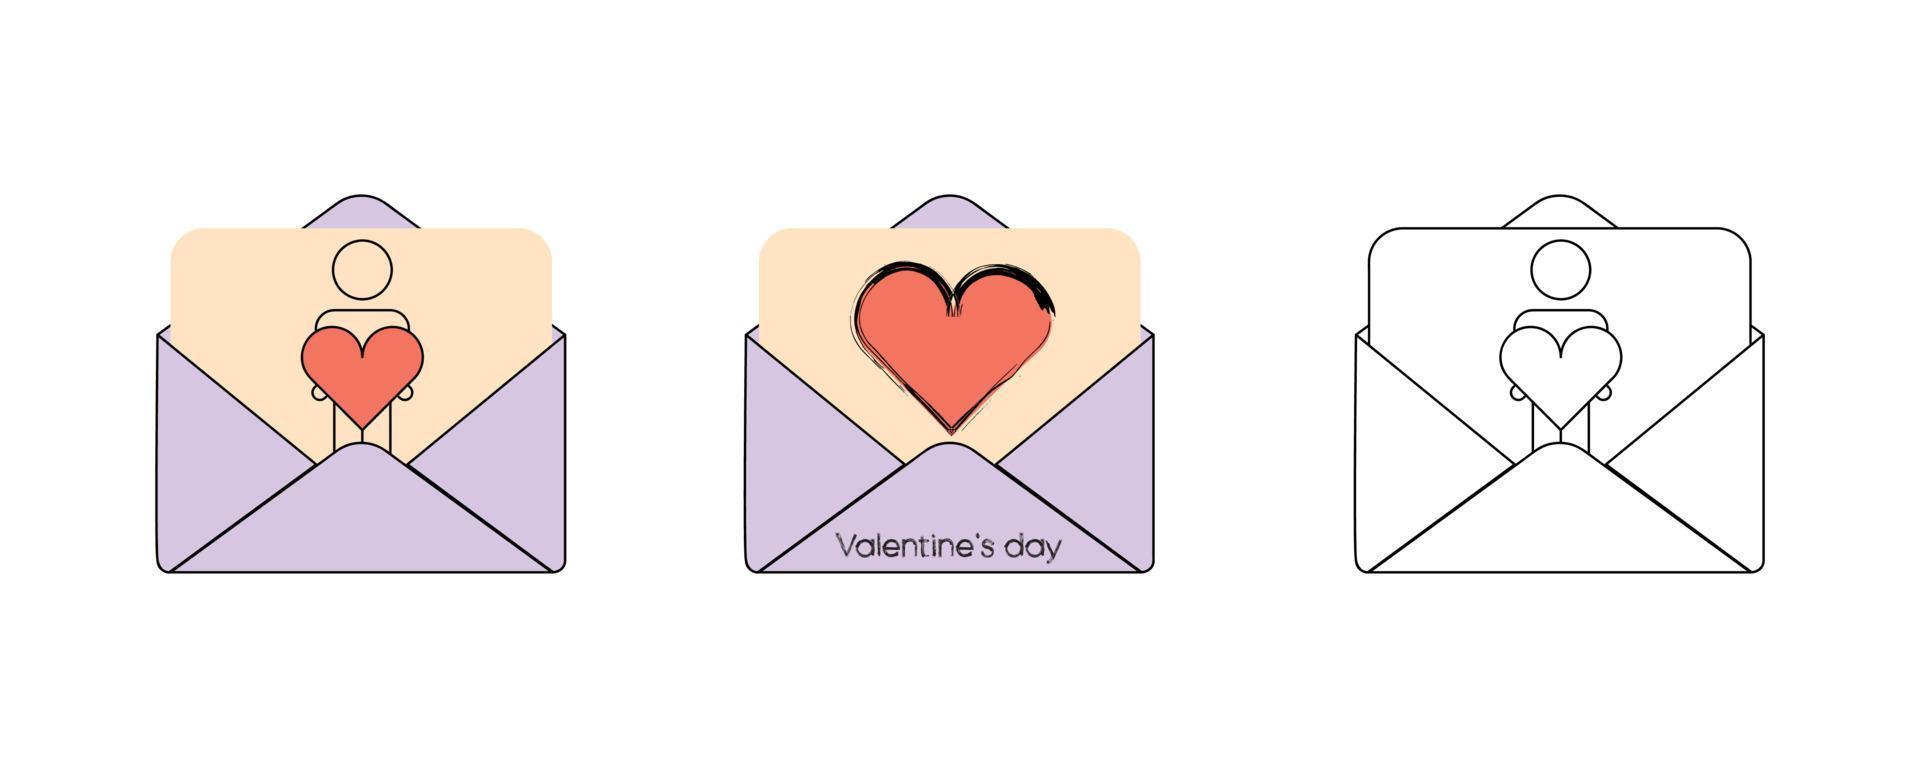 Heart symbols in envelope. Valentine's day thin line icon set. February 14 Valentine's Day. White simple February 14 black and color symbol. Web design, logo design, poster poster. Vector illustration